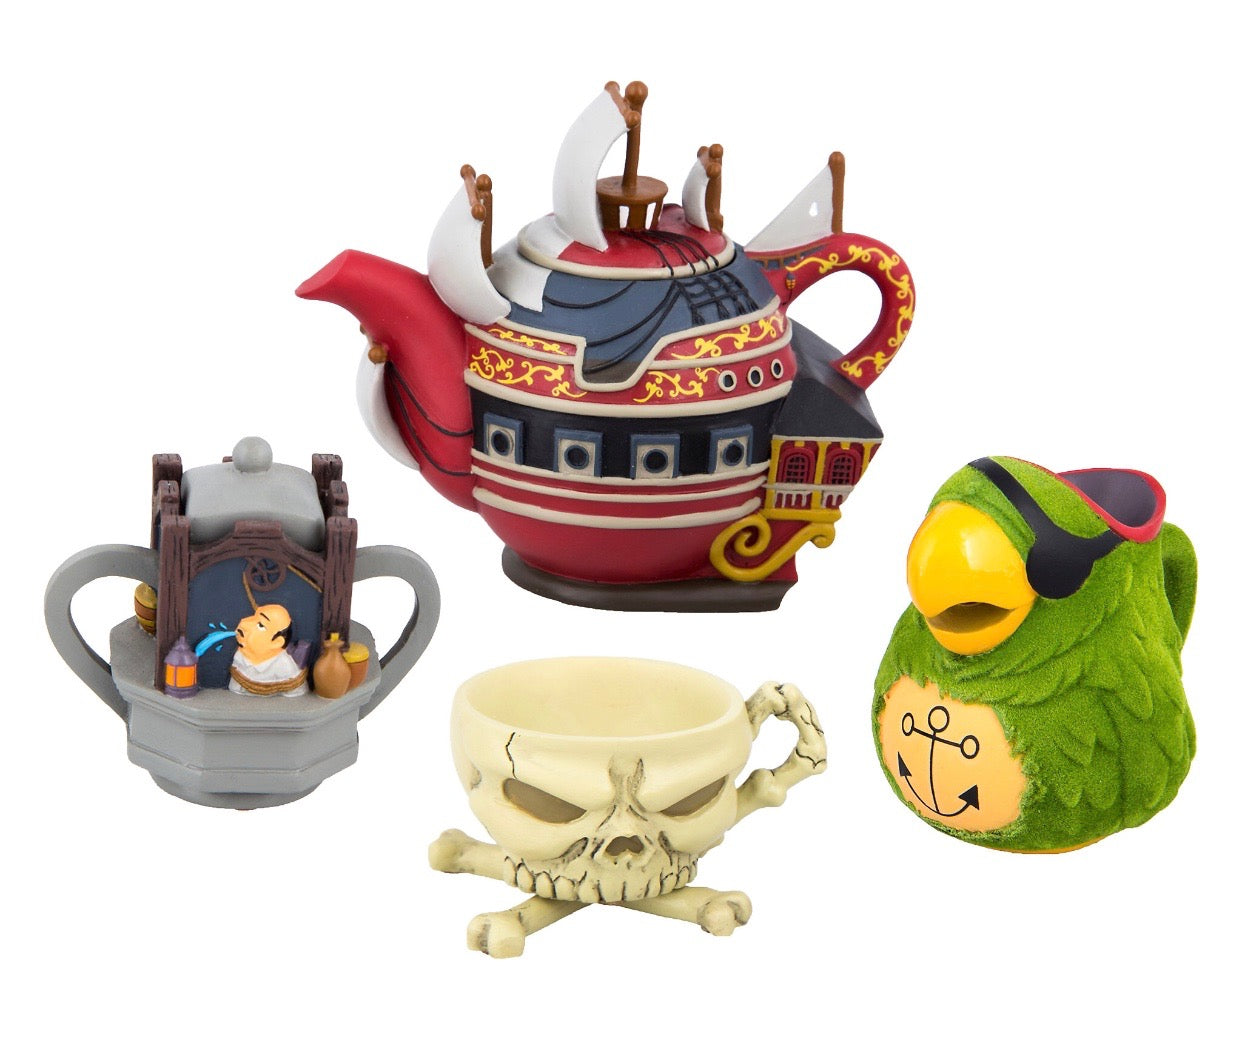 Disney Parks Pirates of the Caribbean Mini Tea Set New with Box